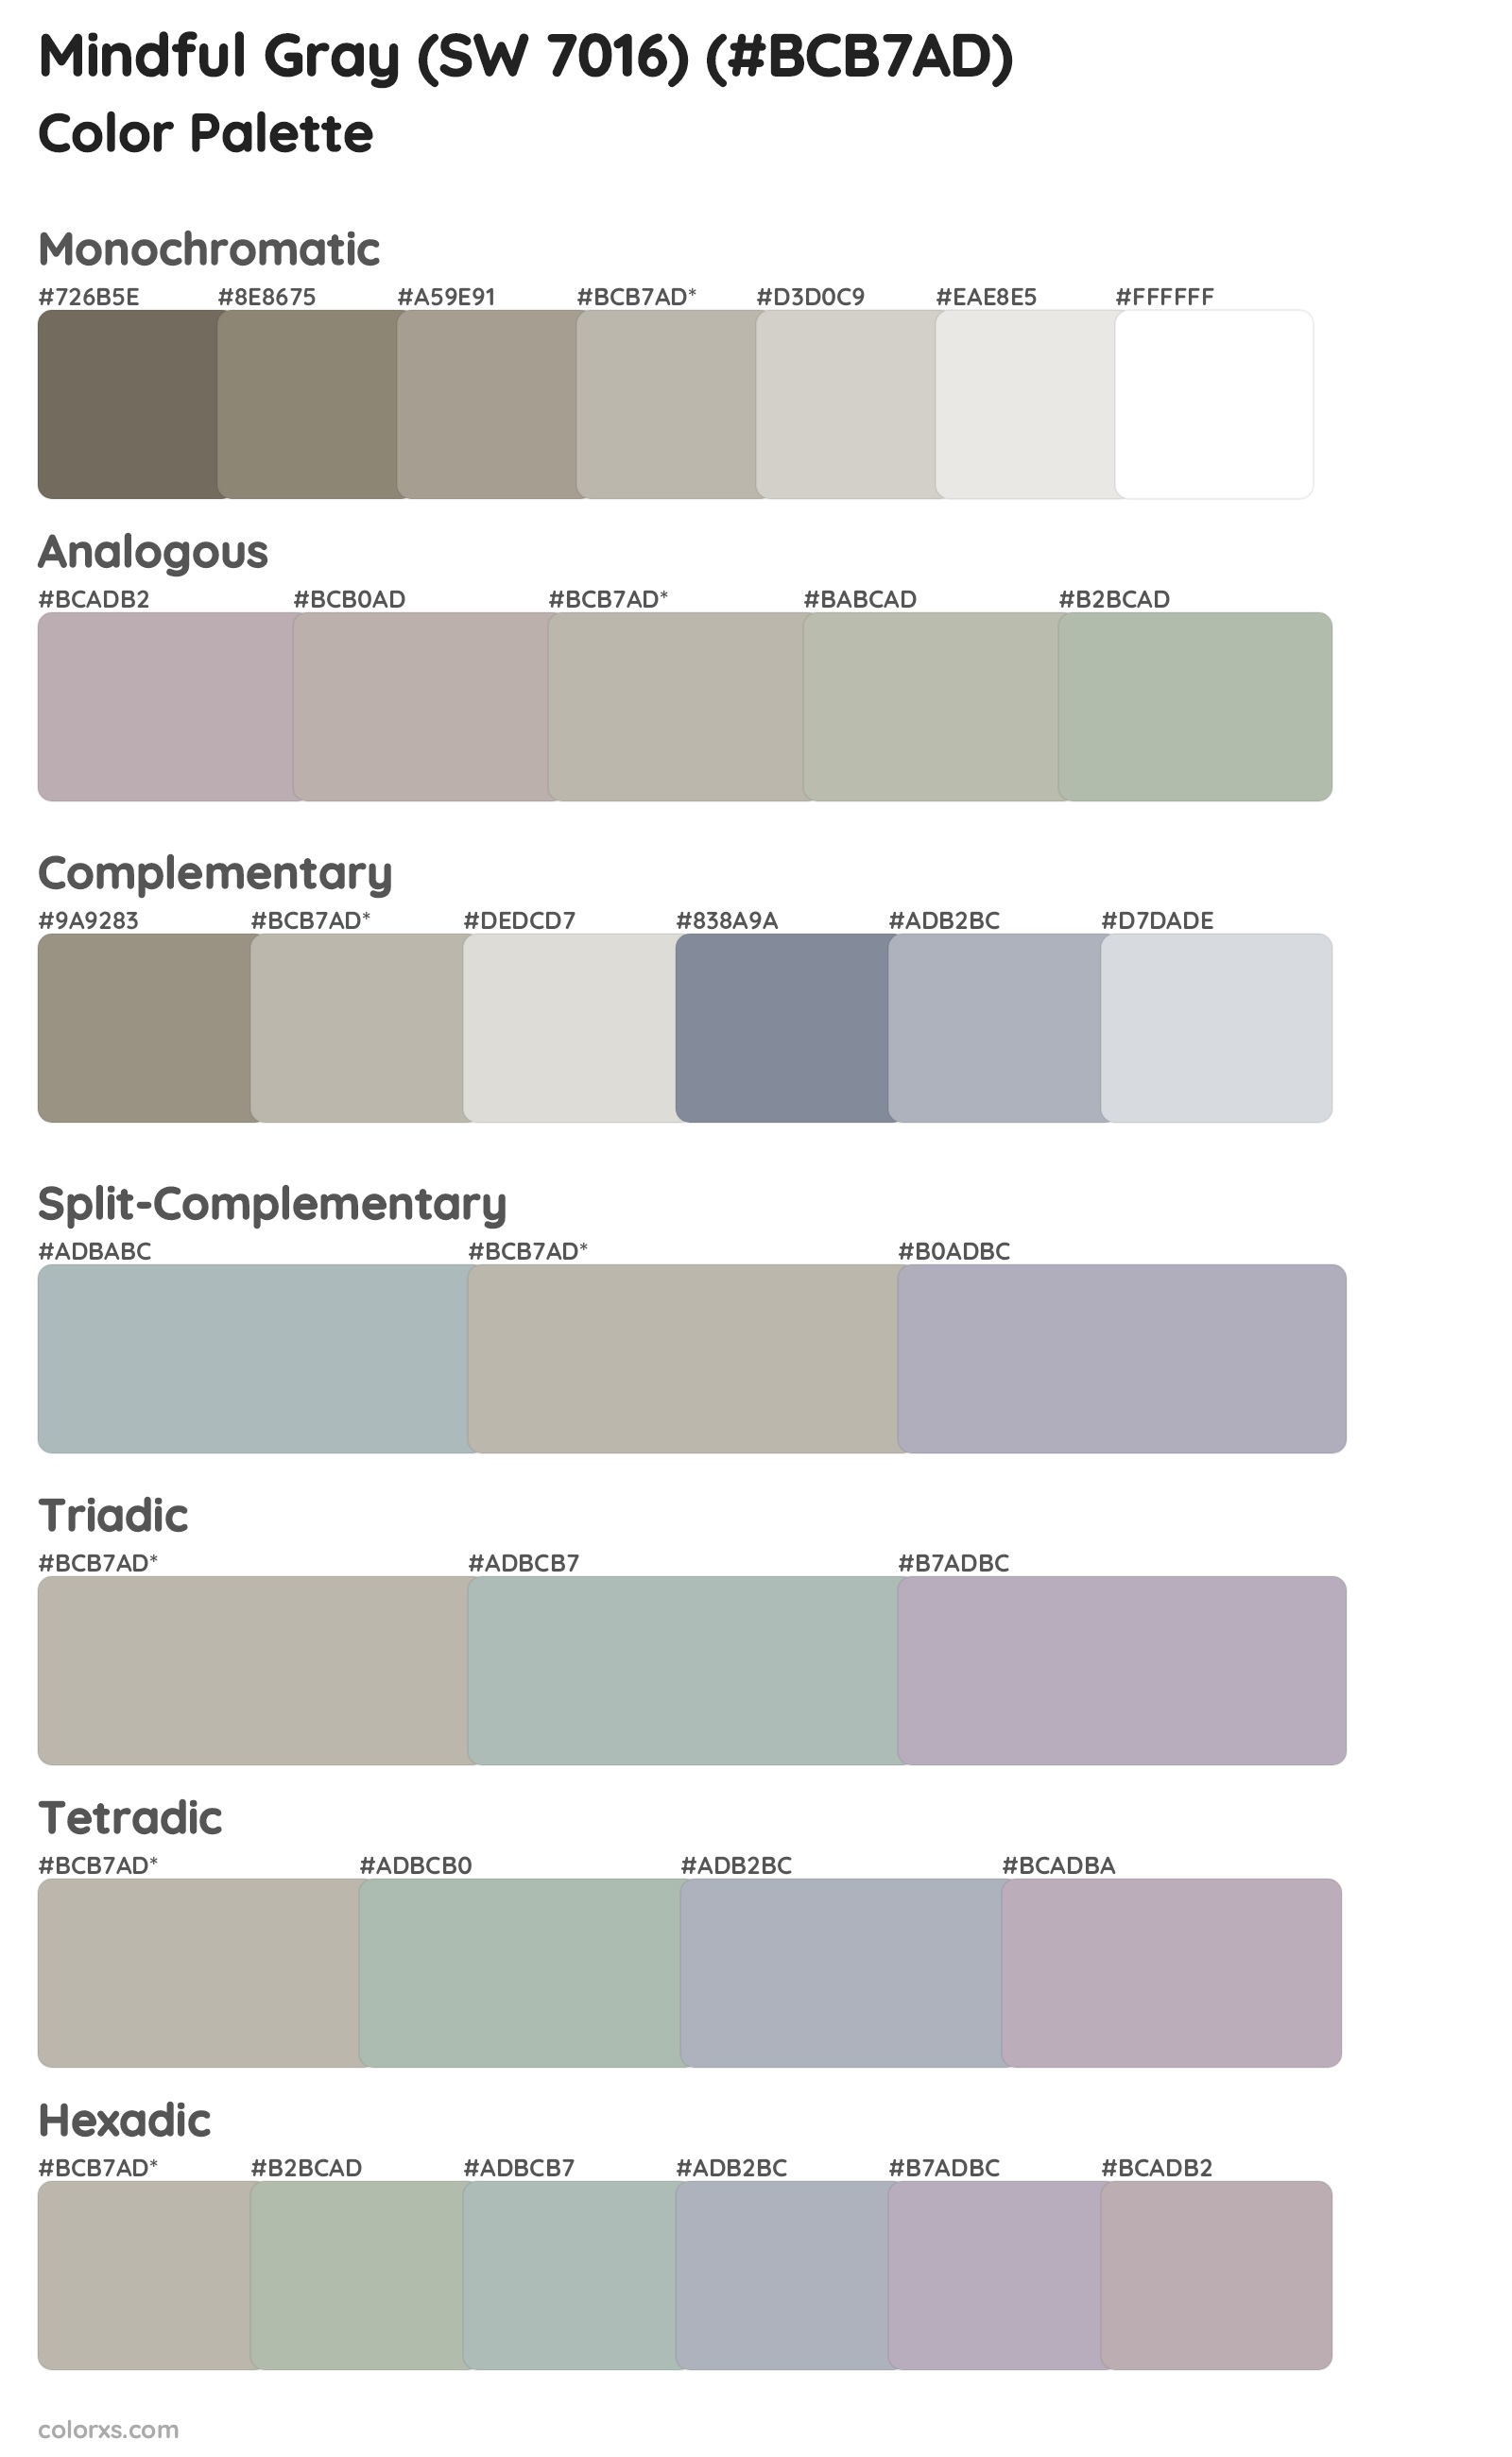 Mindful Gray (SW 7016) Color Scheme Palettes